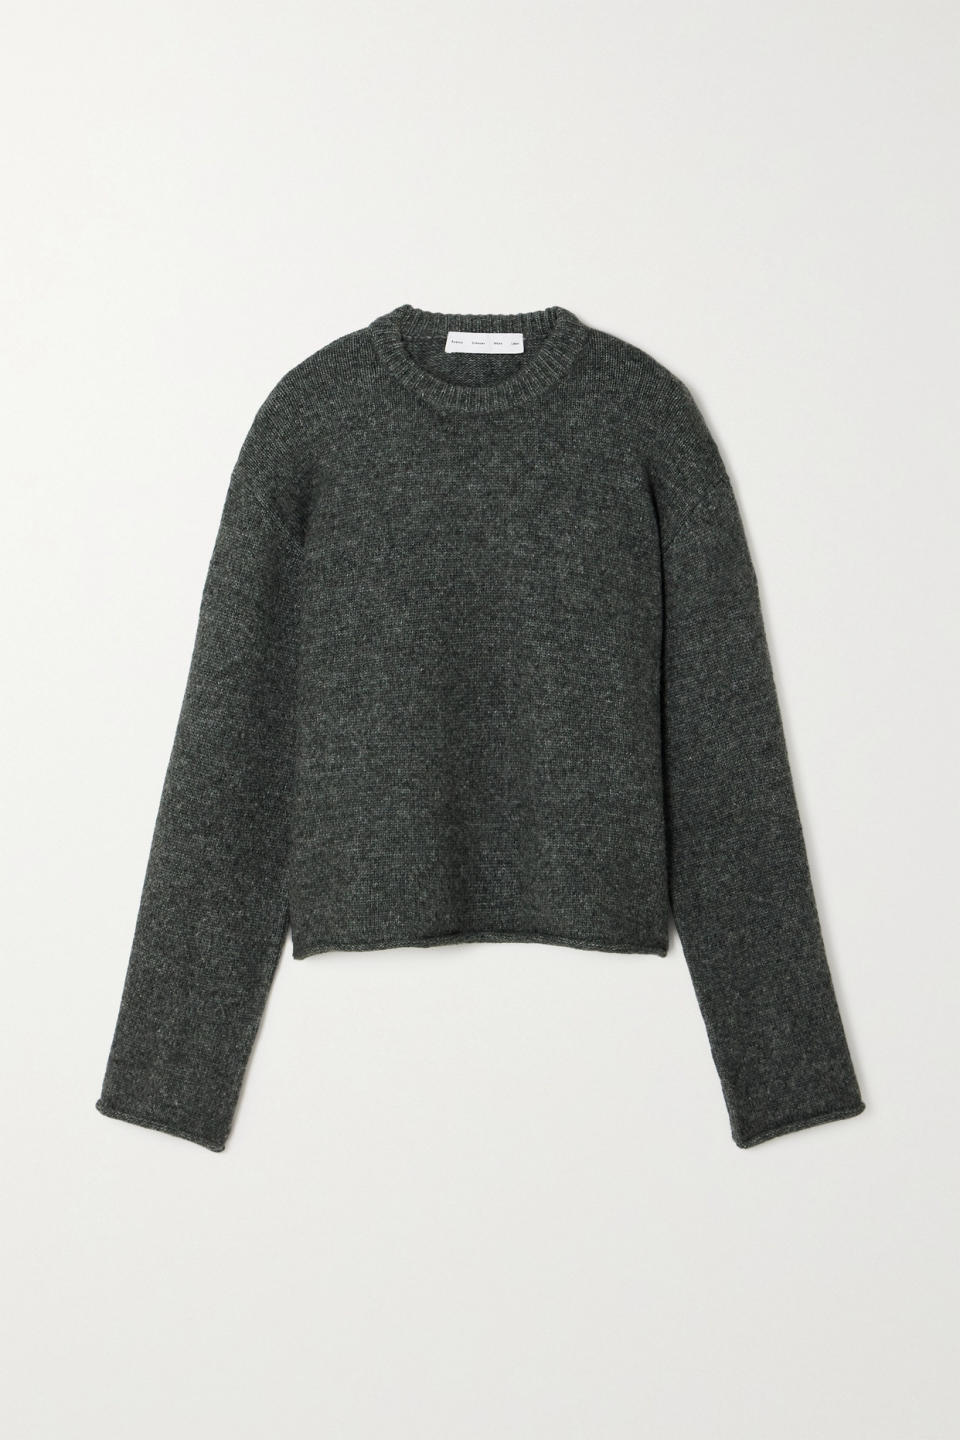 Tara knitted sweater